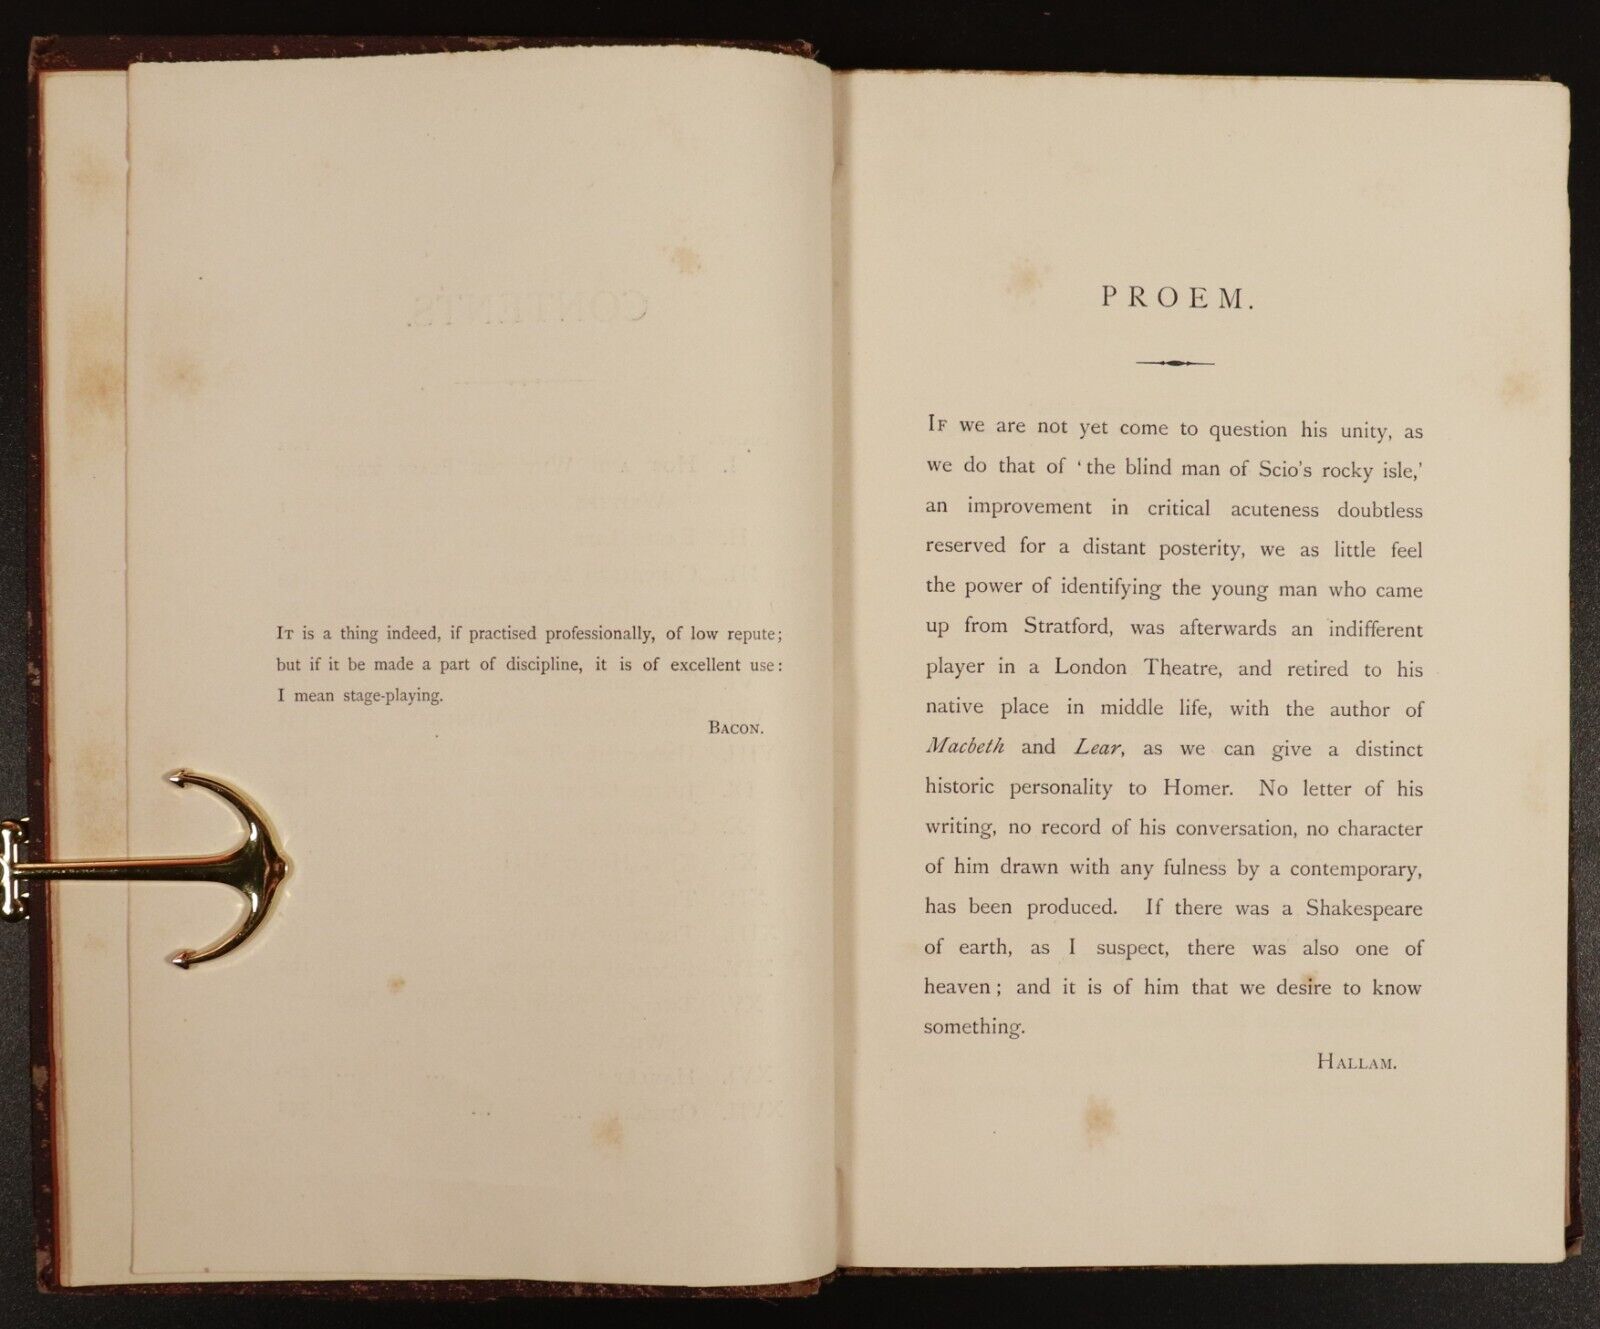 1880 On Renascence Drama Or History Made Visible Antiquarian Literature Book